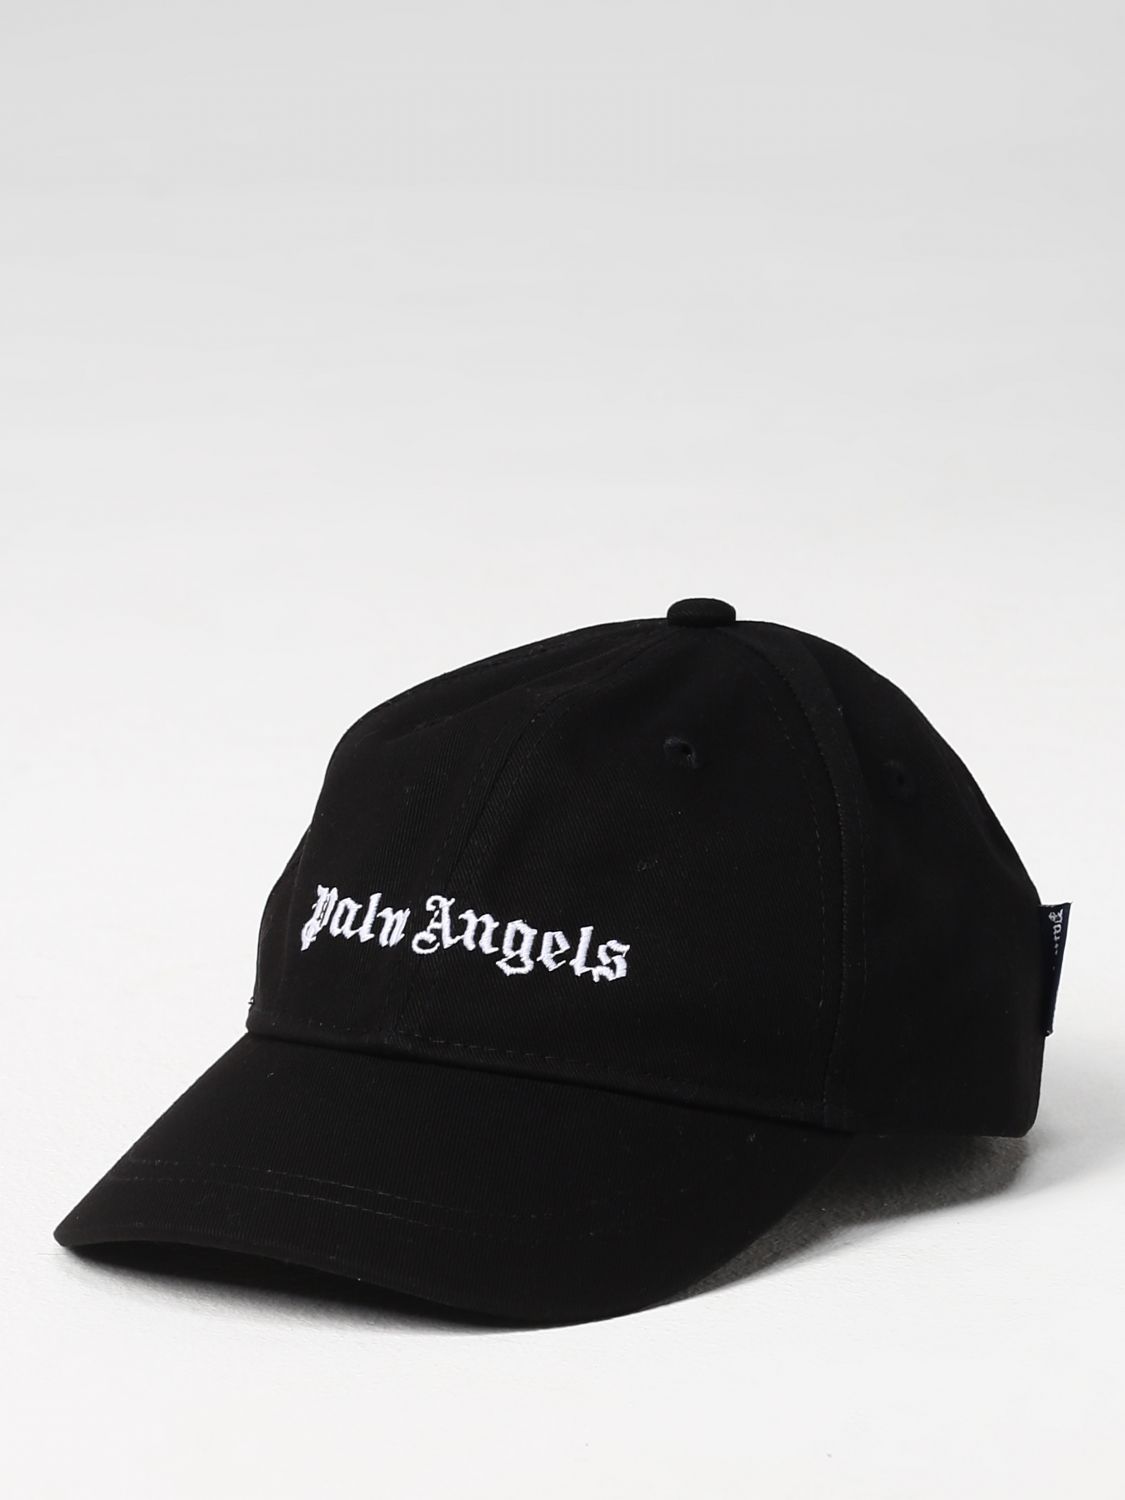 Palm Angels Outlet: hat for kids - Black | Palm Angels hat ...